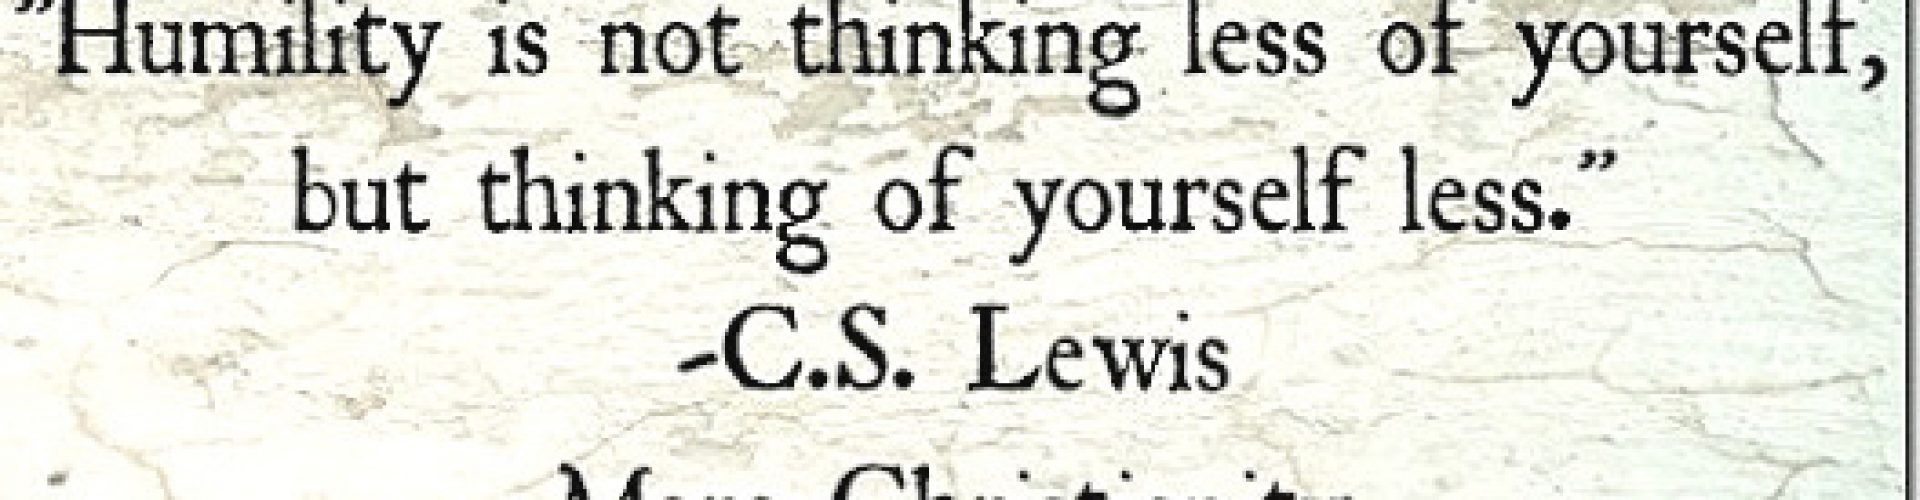 CS-Lewis-Humility-quote2